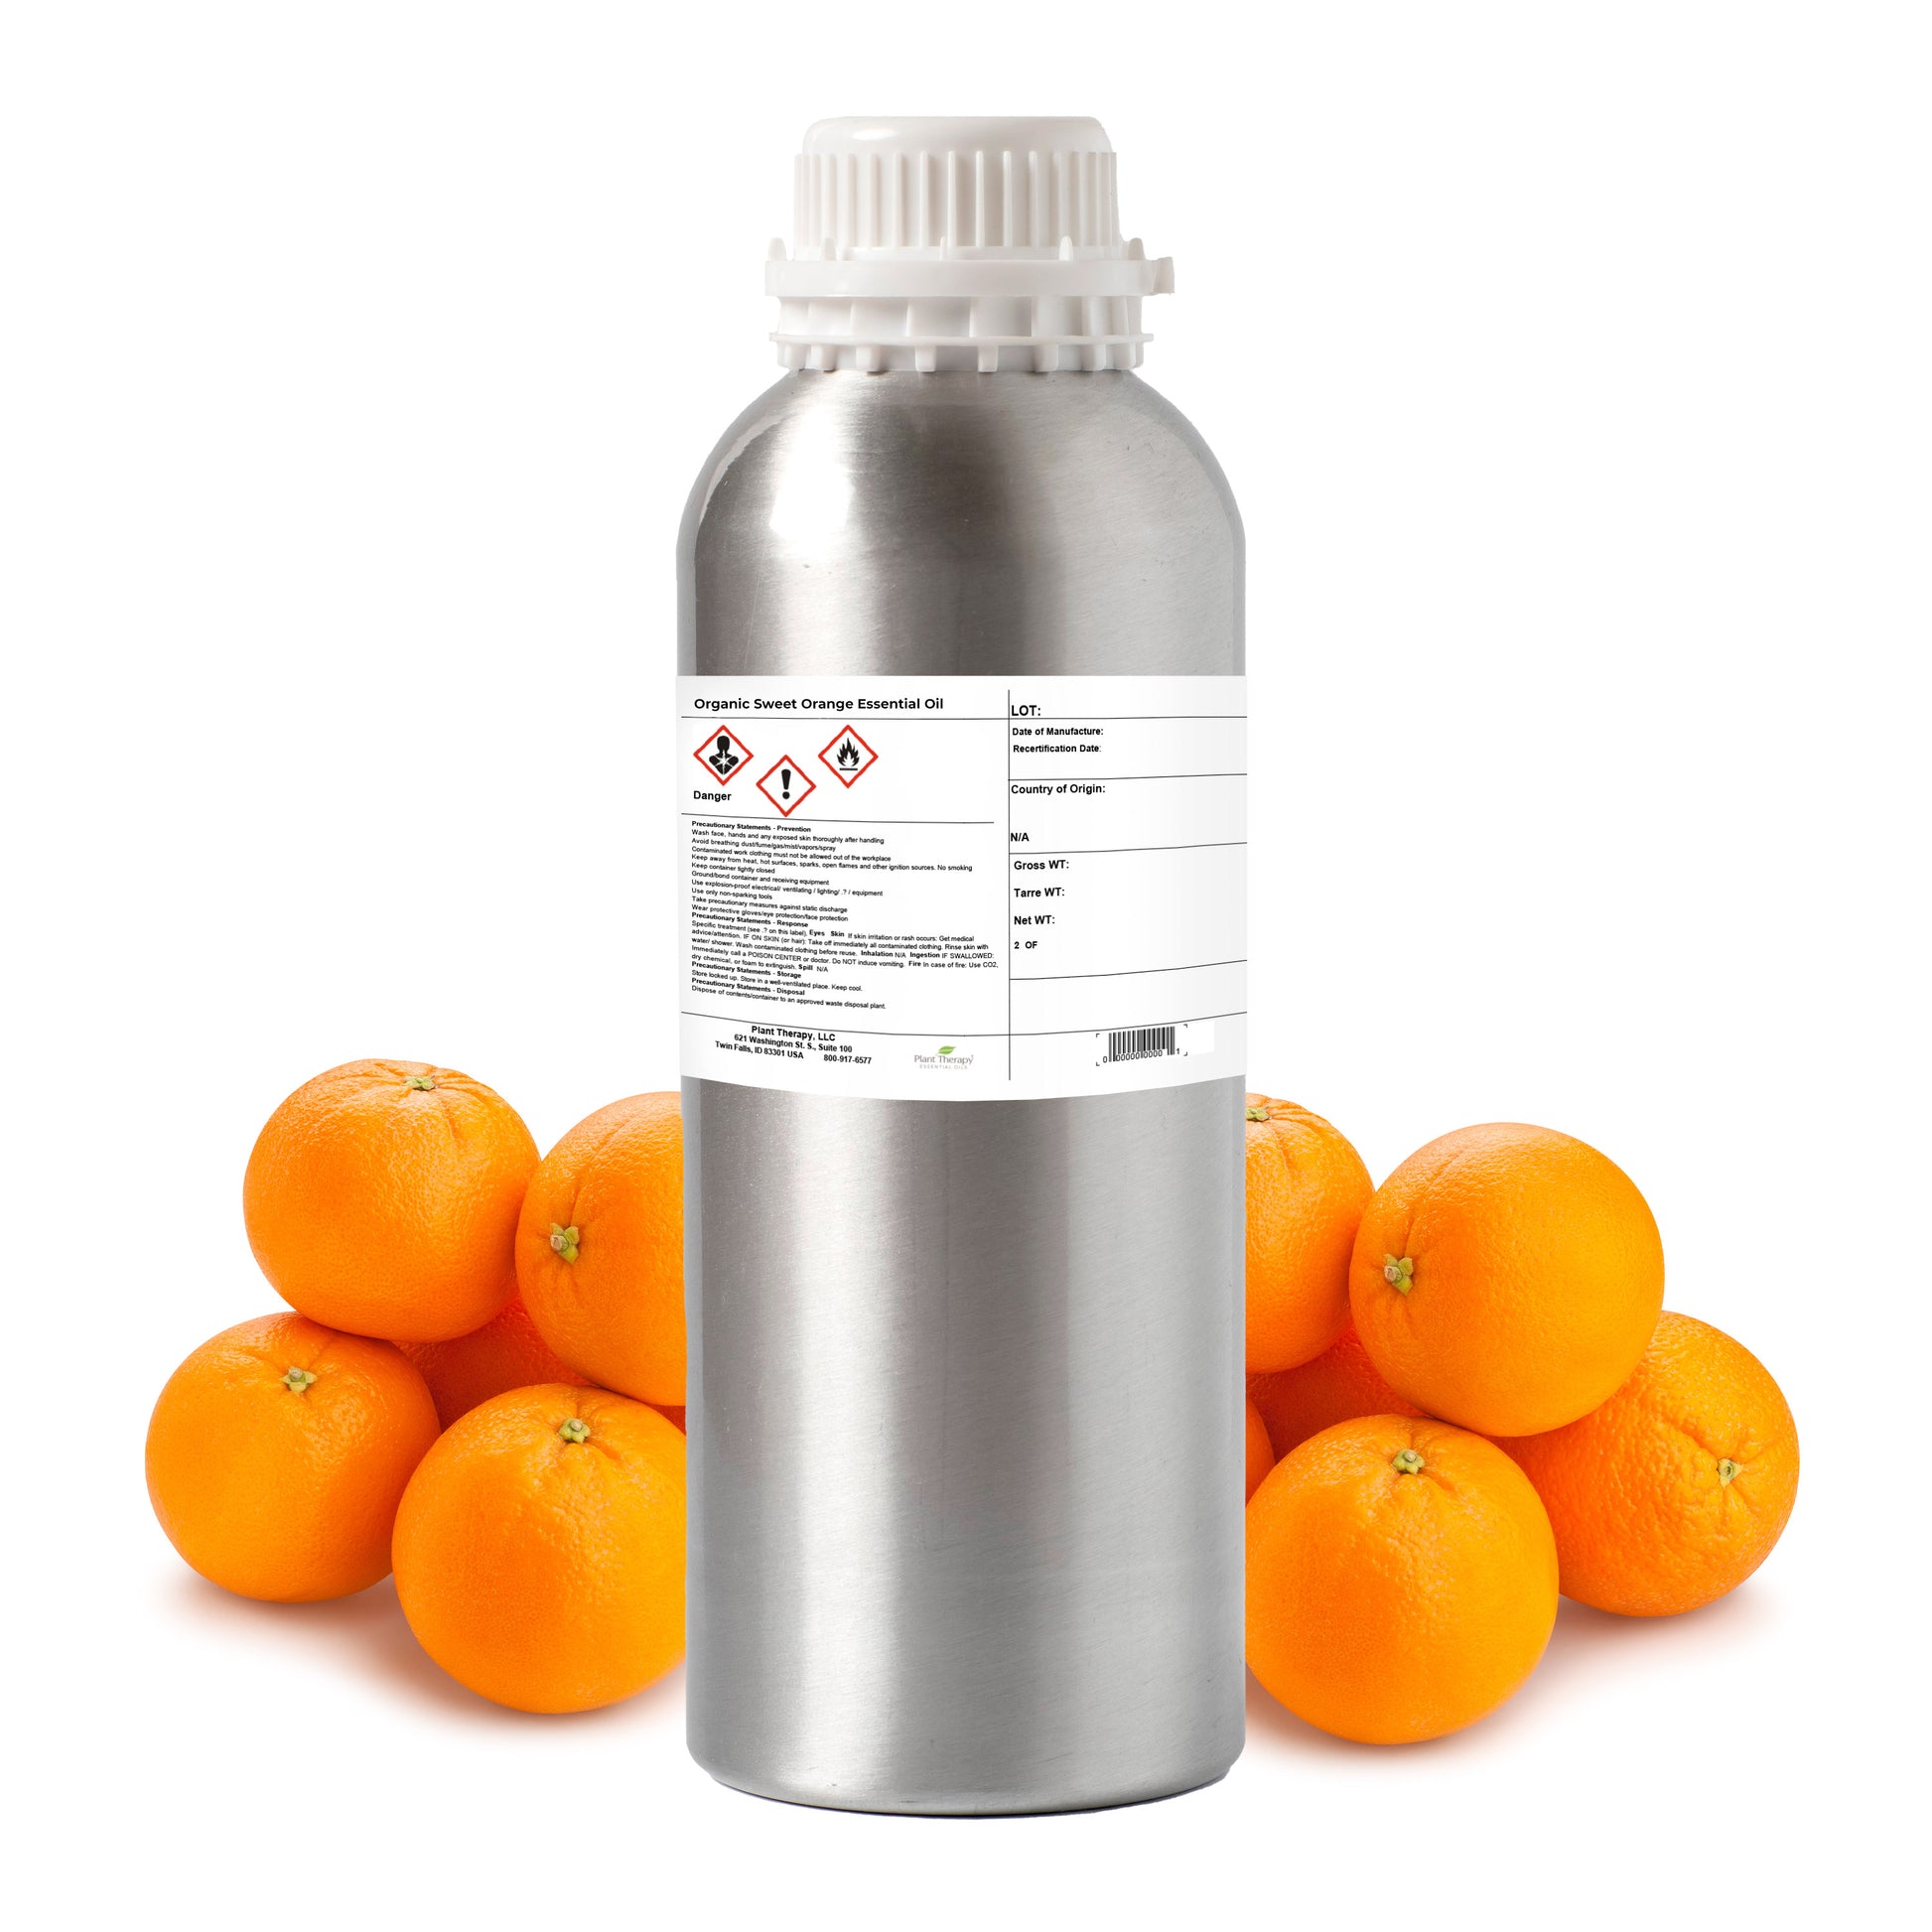 Organic Orange Essential Oil (sweet orange) from Artisan Aromatics